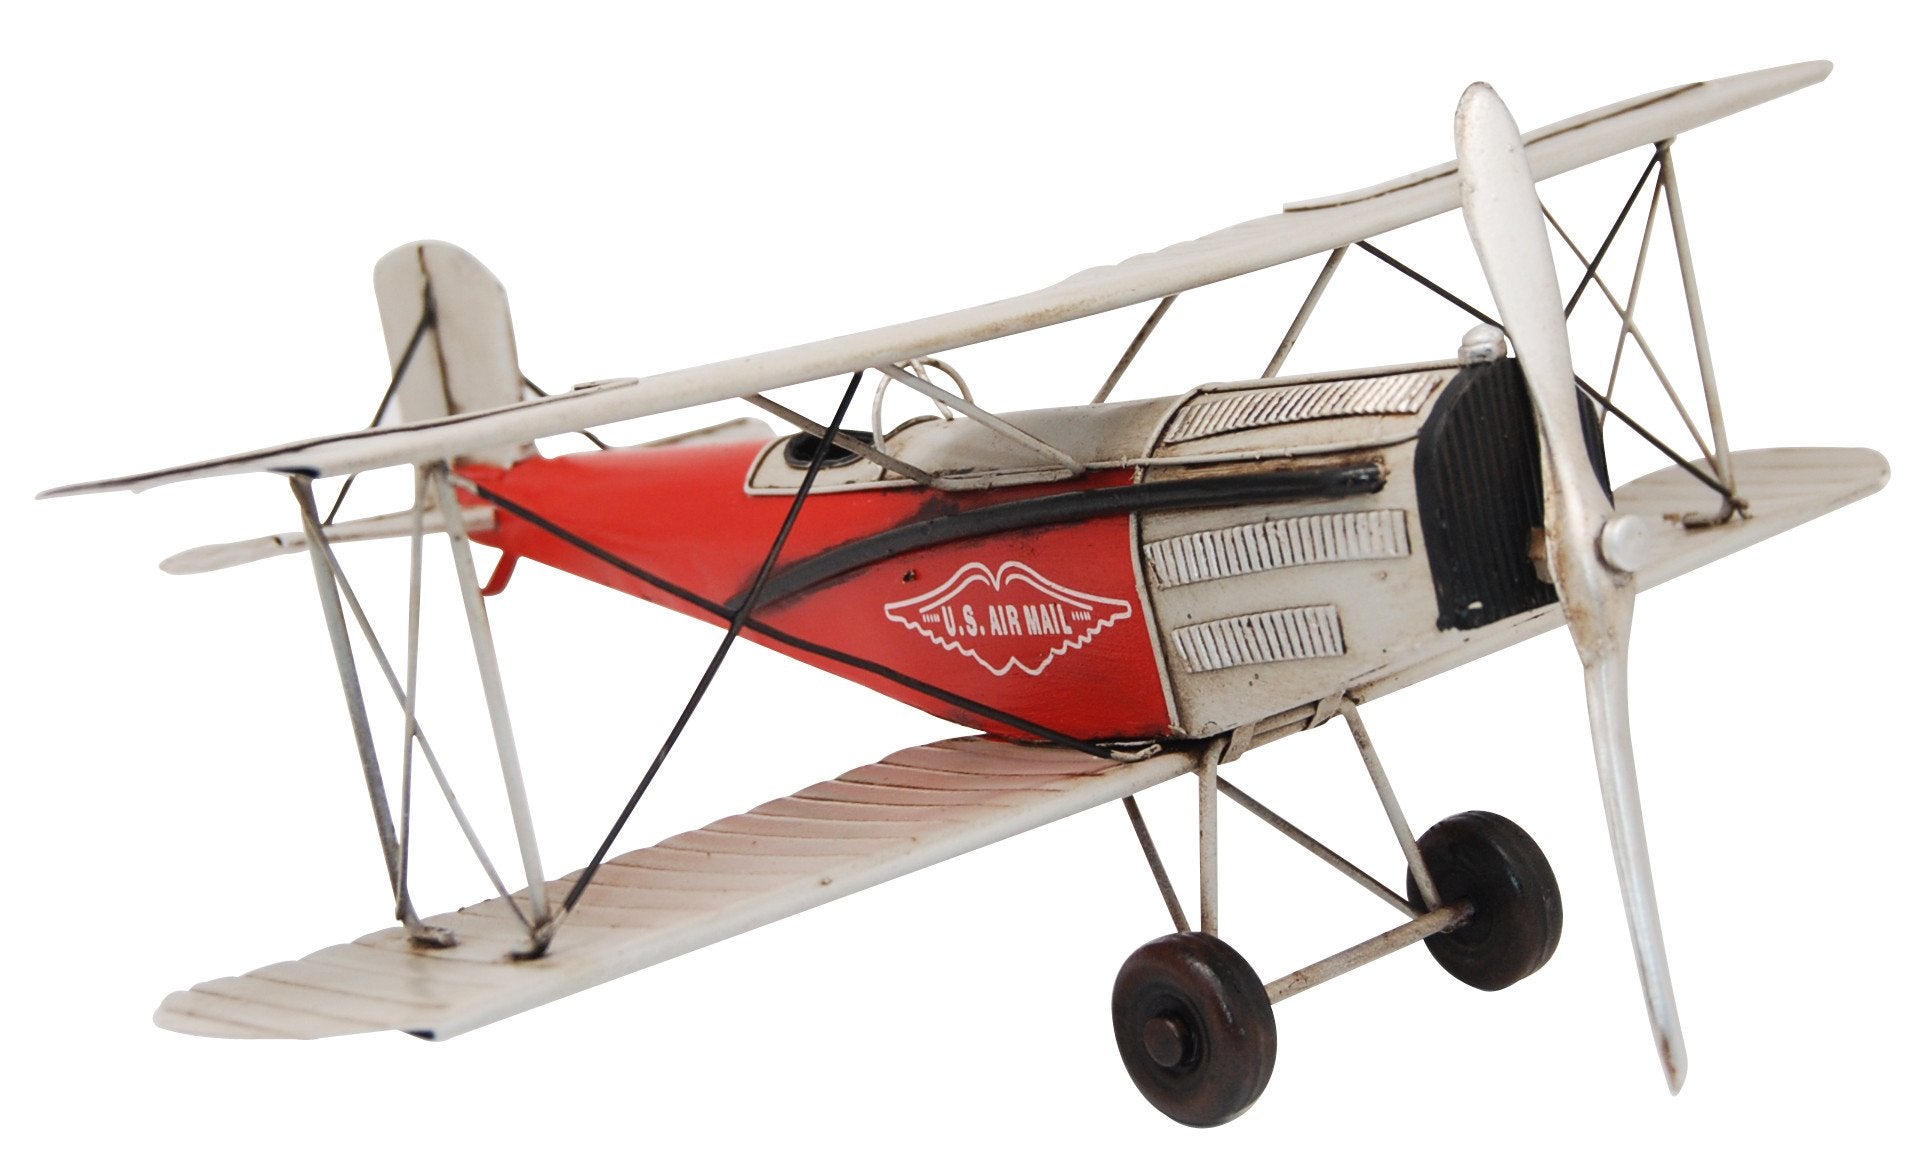 Pretty Valley Home - Retro Classic Handmade Iron '1926 Douglas M - 2 Airmail Plane' Model Craft Figure